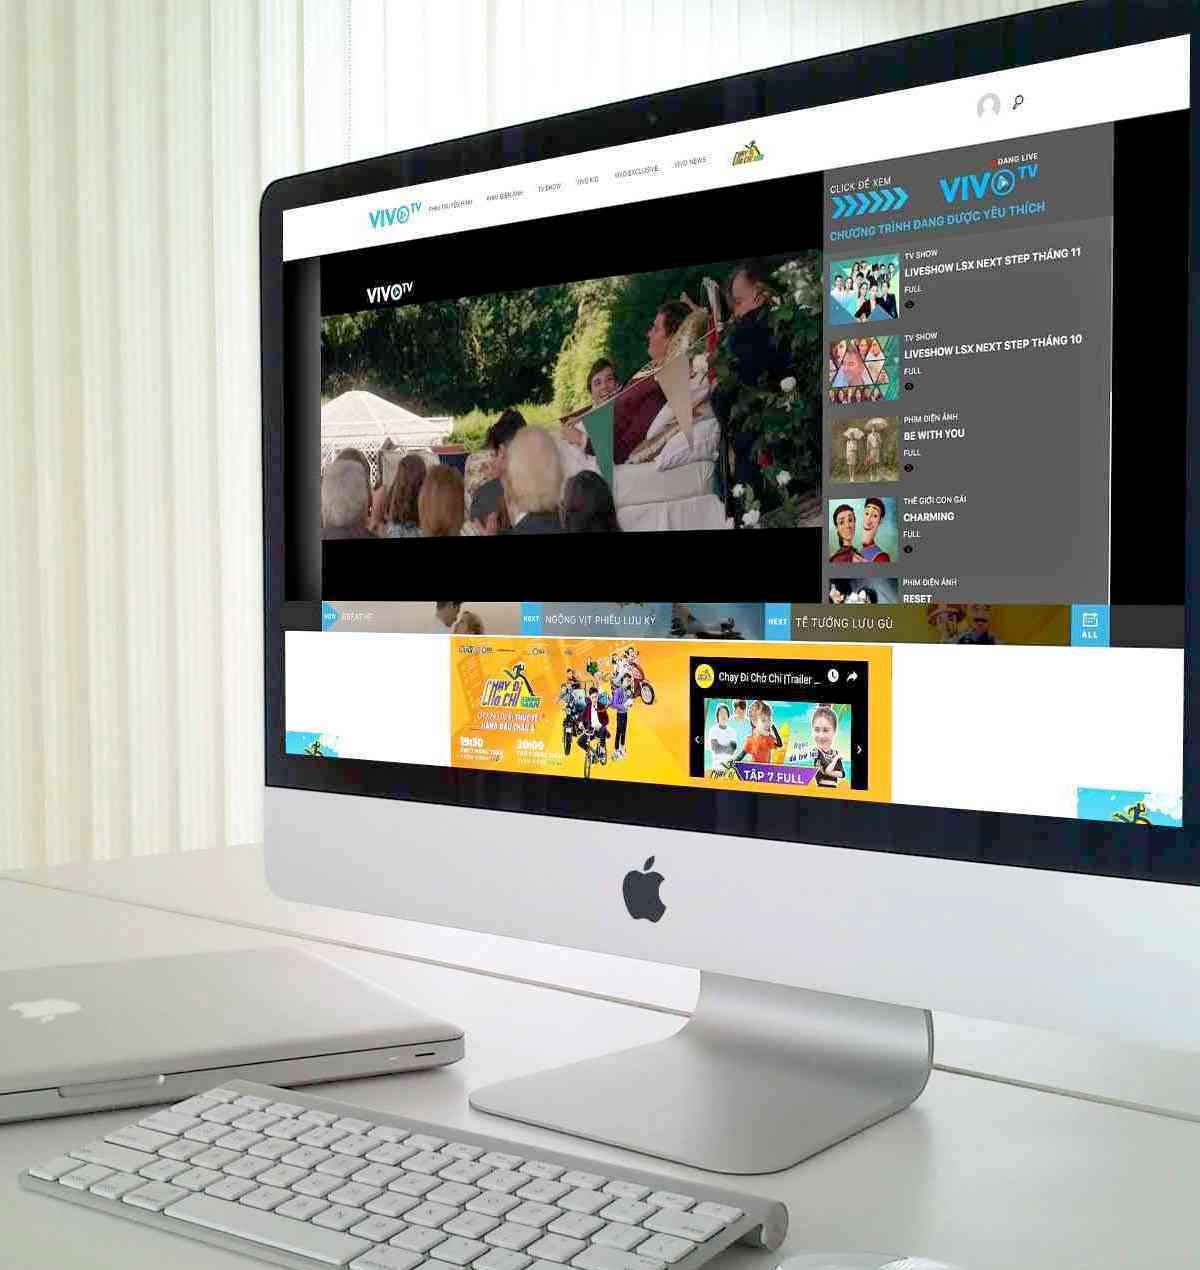 Vivo - Online Television Channel